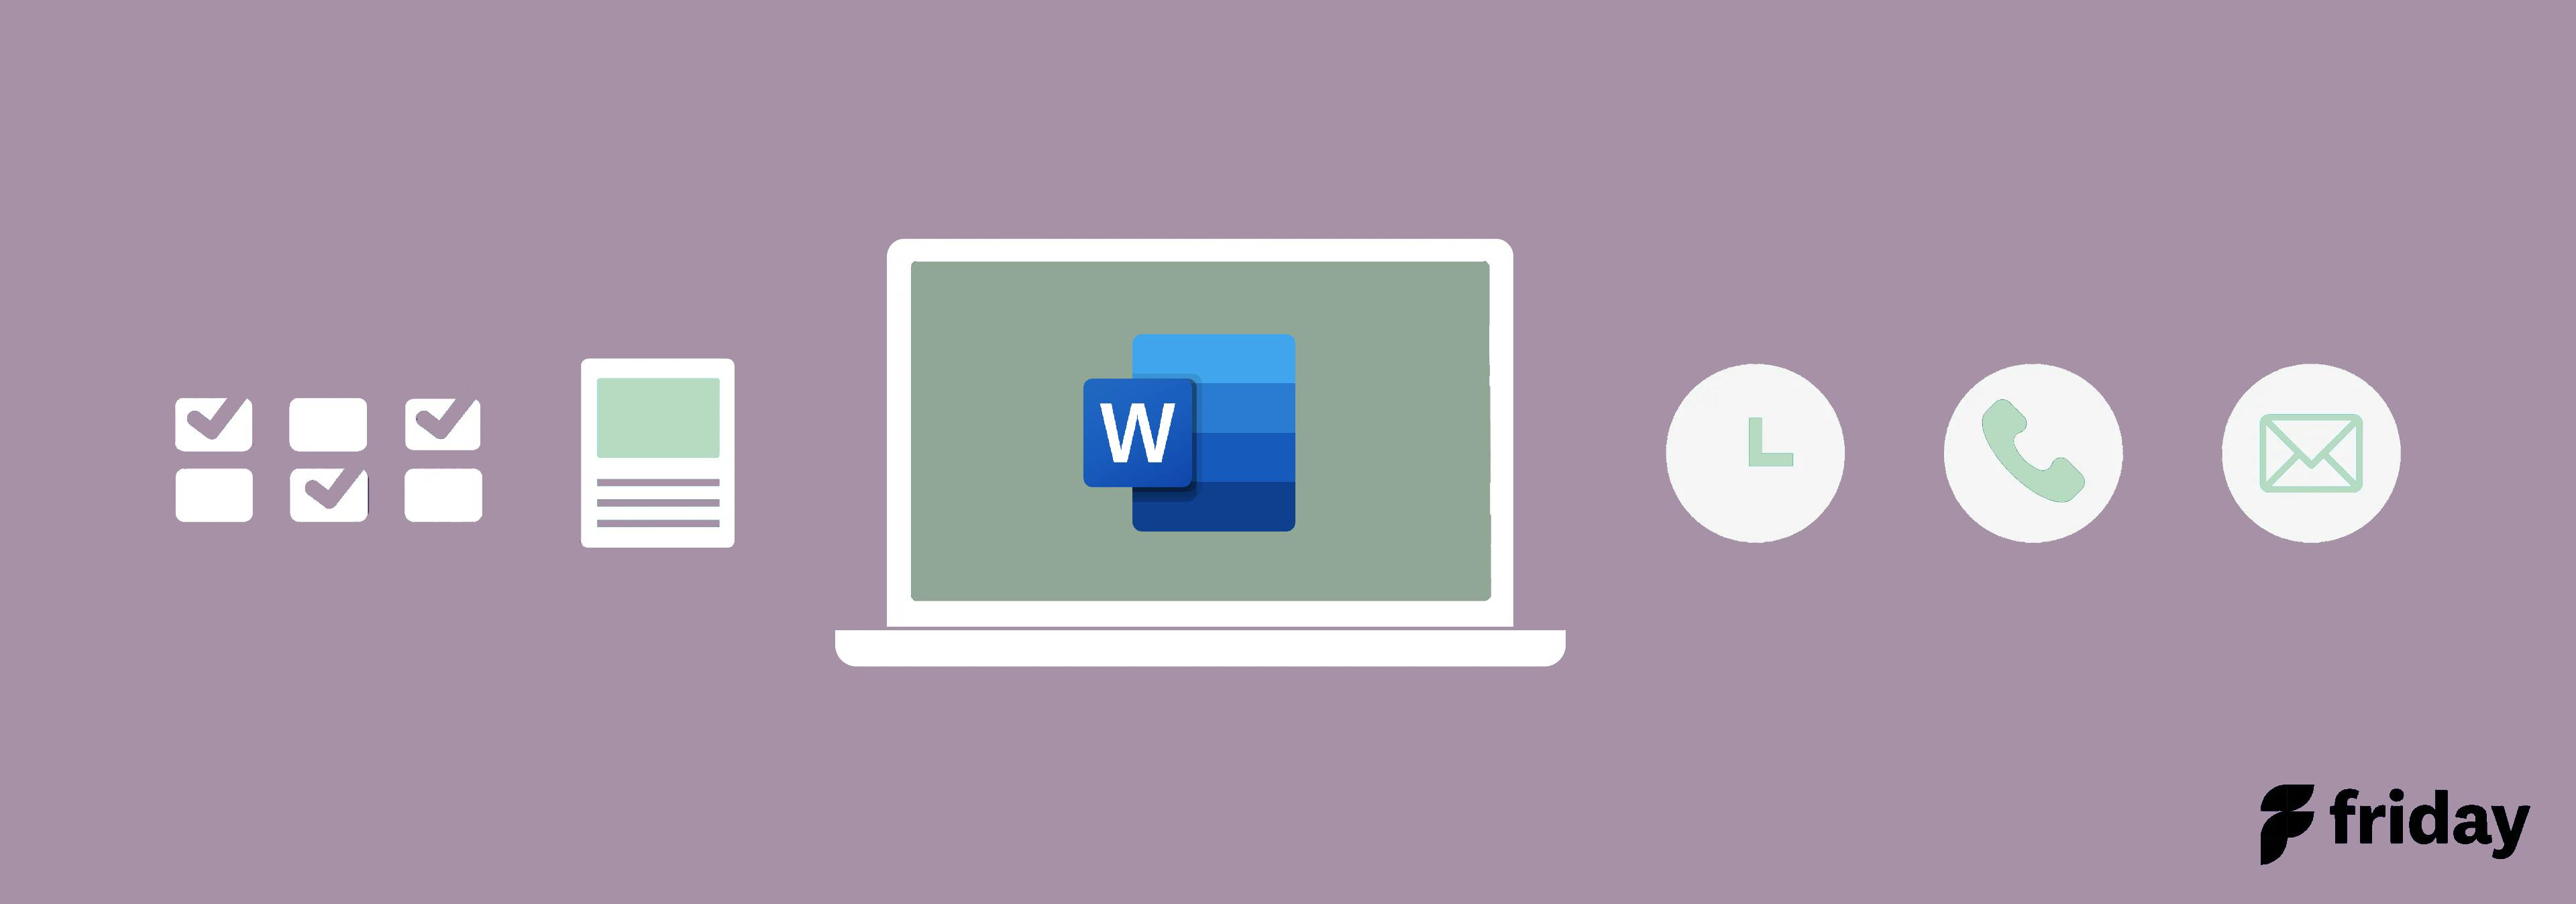 Microsoft Word Alternatives: Top 5 Free Tools for Writing - FuseBase  (Formerly Nimbus)